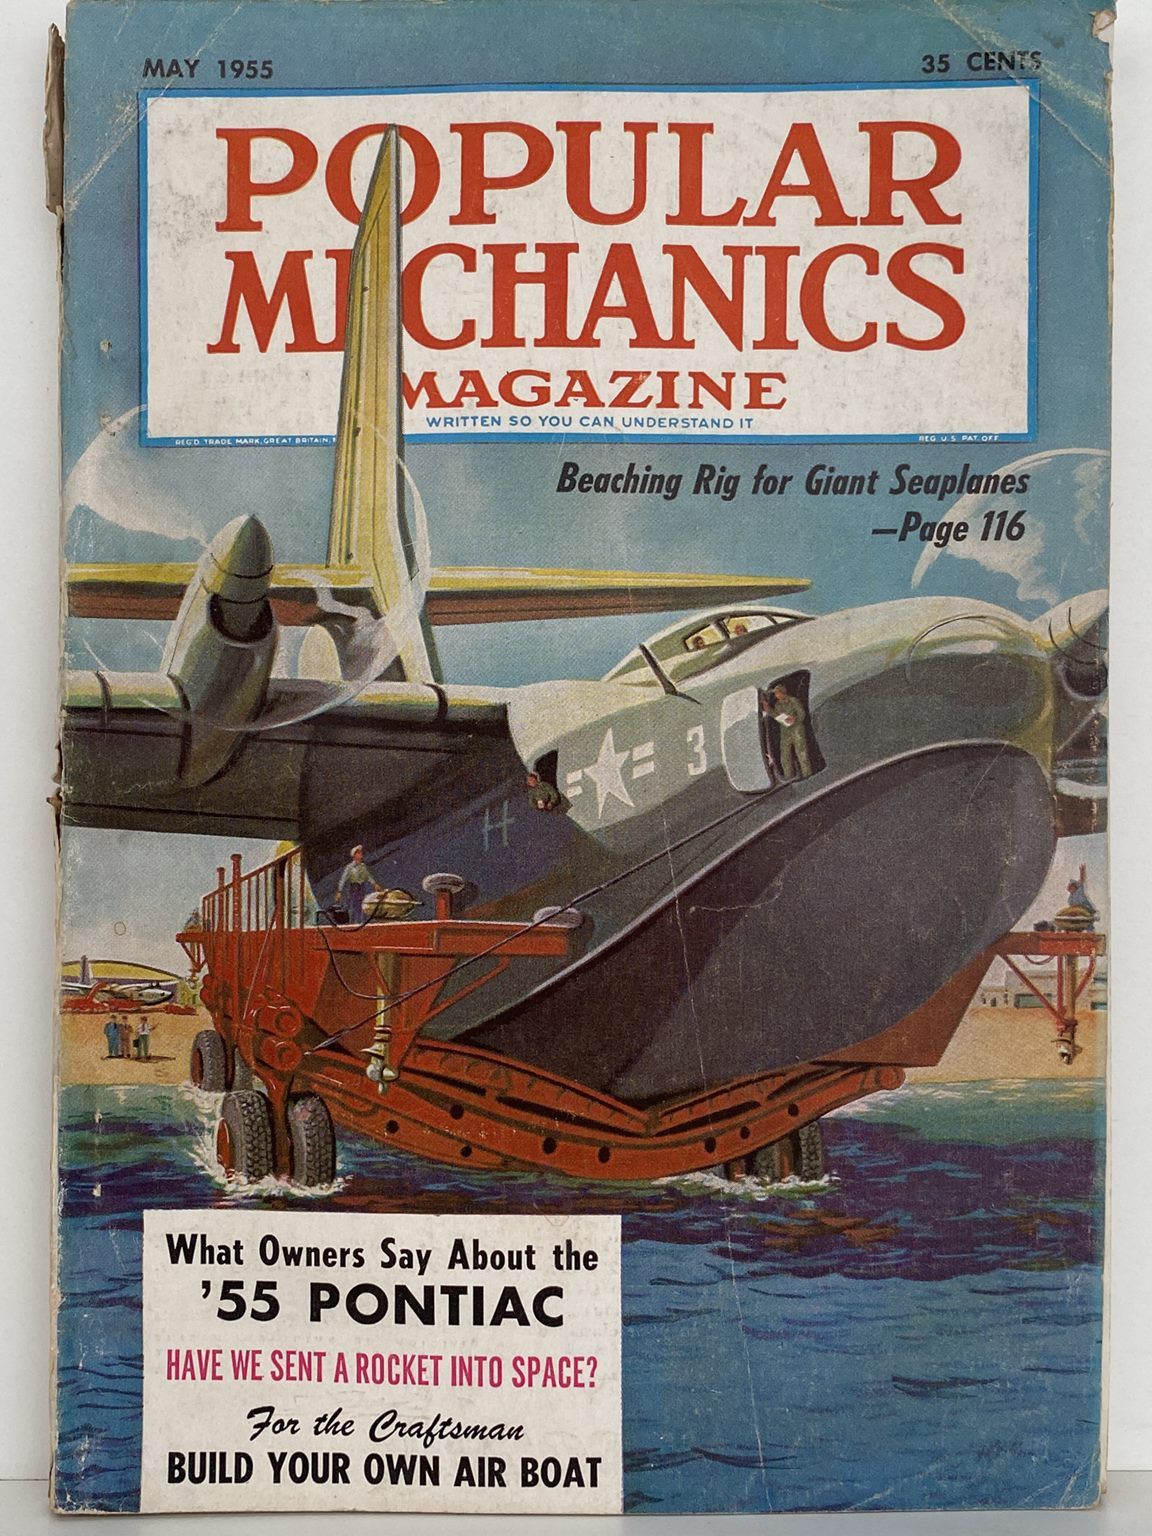 VINTAGE MAGAZINE: Popular Mechanics - Vol. 103, No. 5 - May 1955